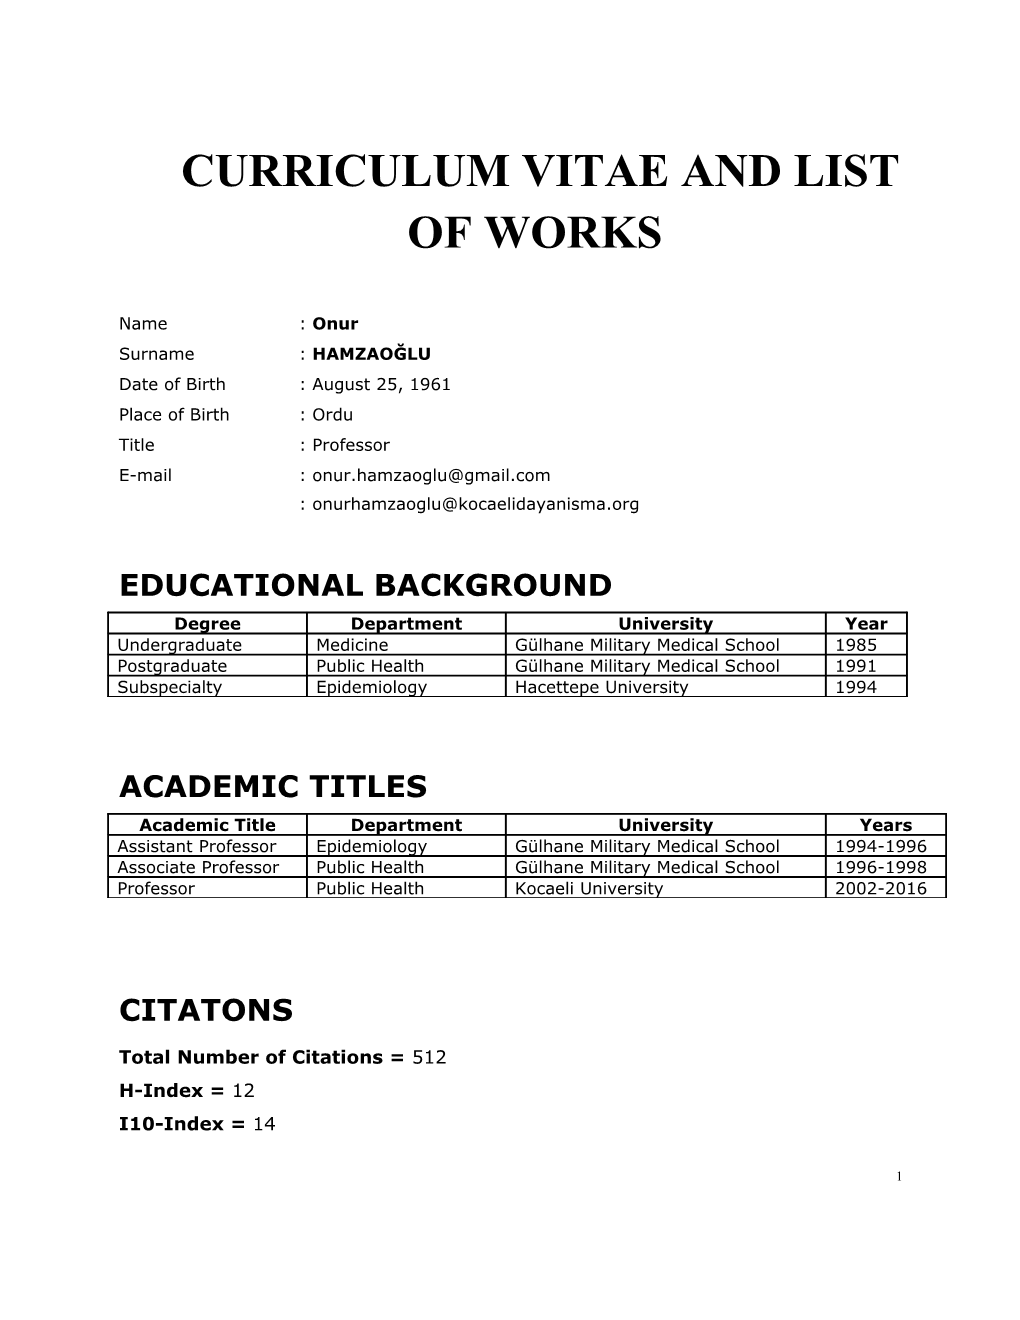 Curriculum Vitae and List of Works